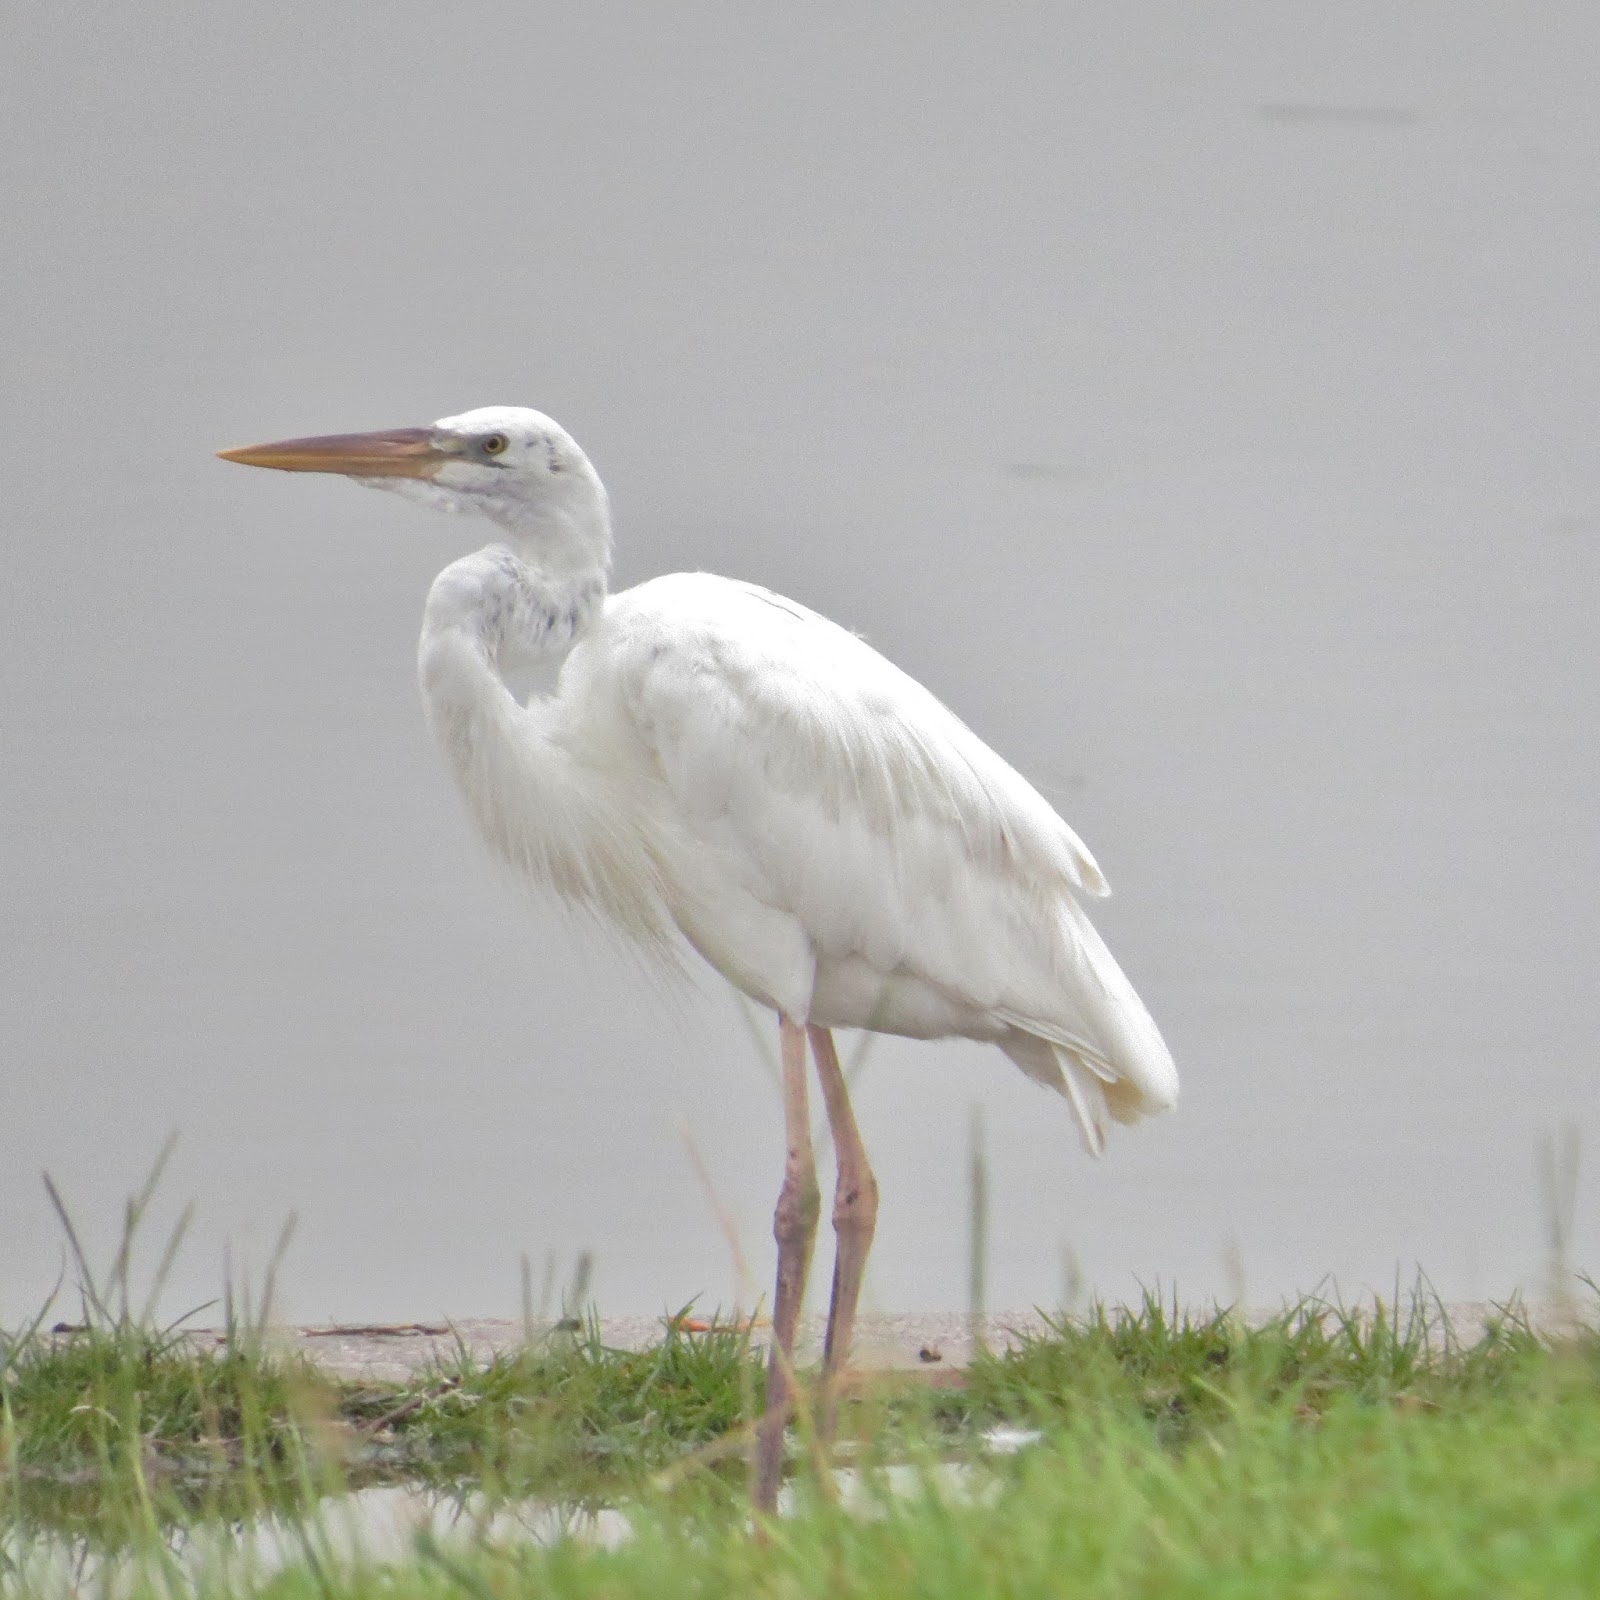 Florida Suncoast Birding: Flamingo and a Great White Heron